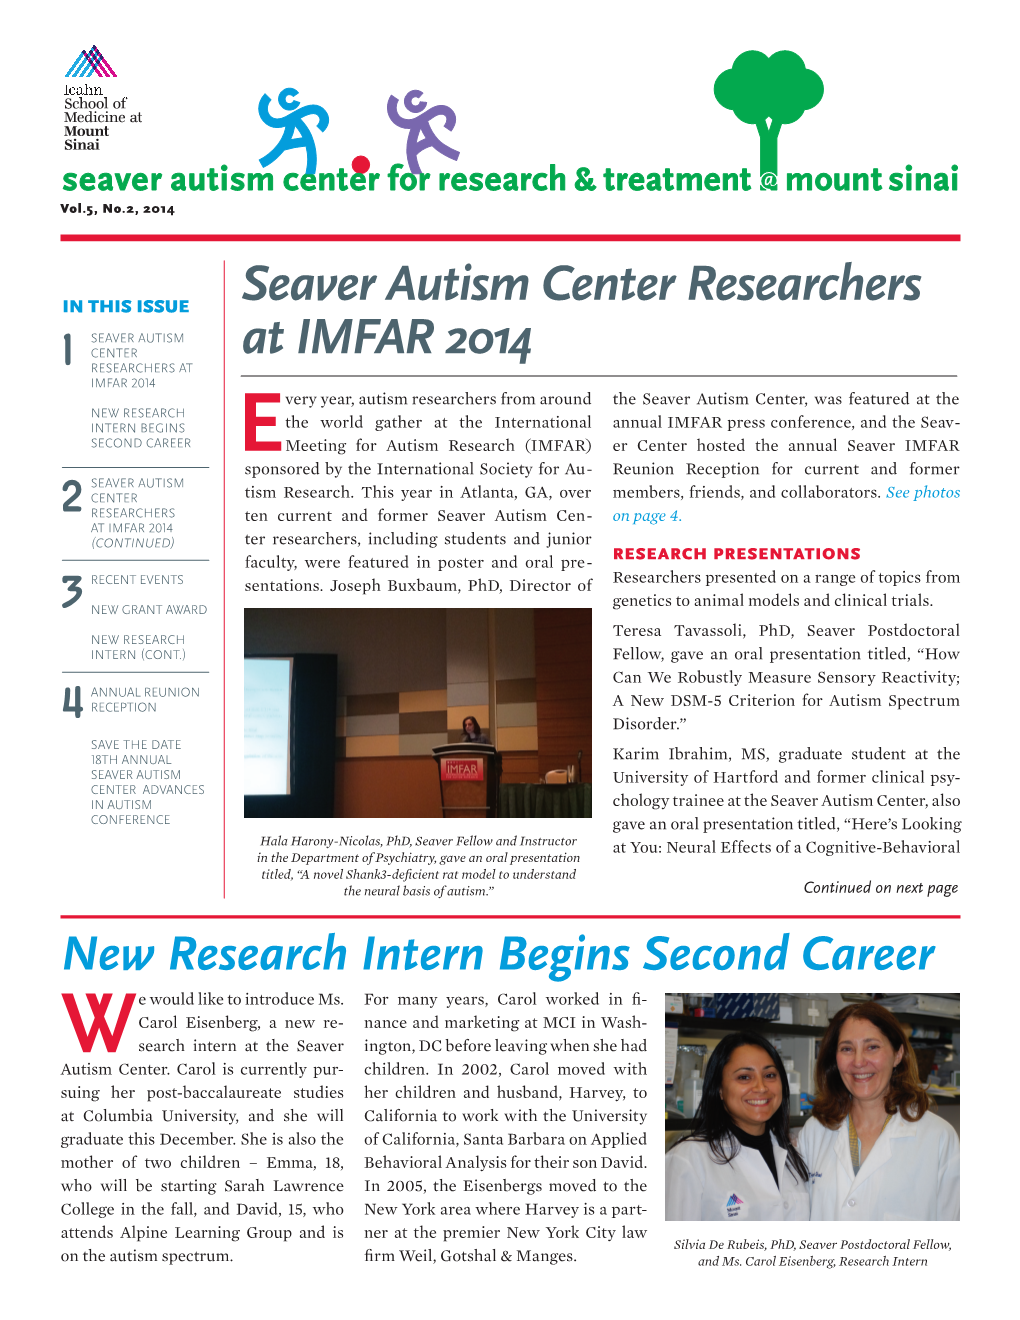 Seaver Autism Center Researchers at IMFAR 2014